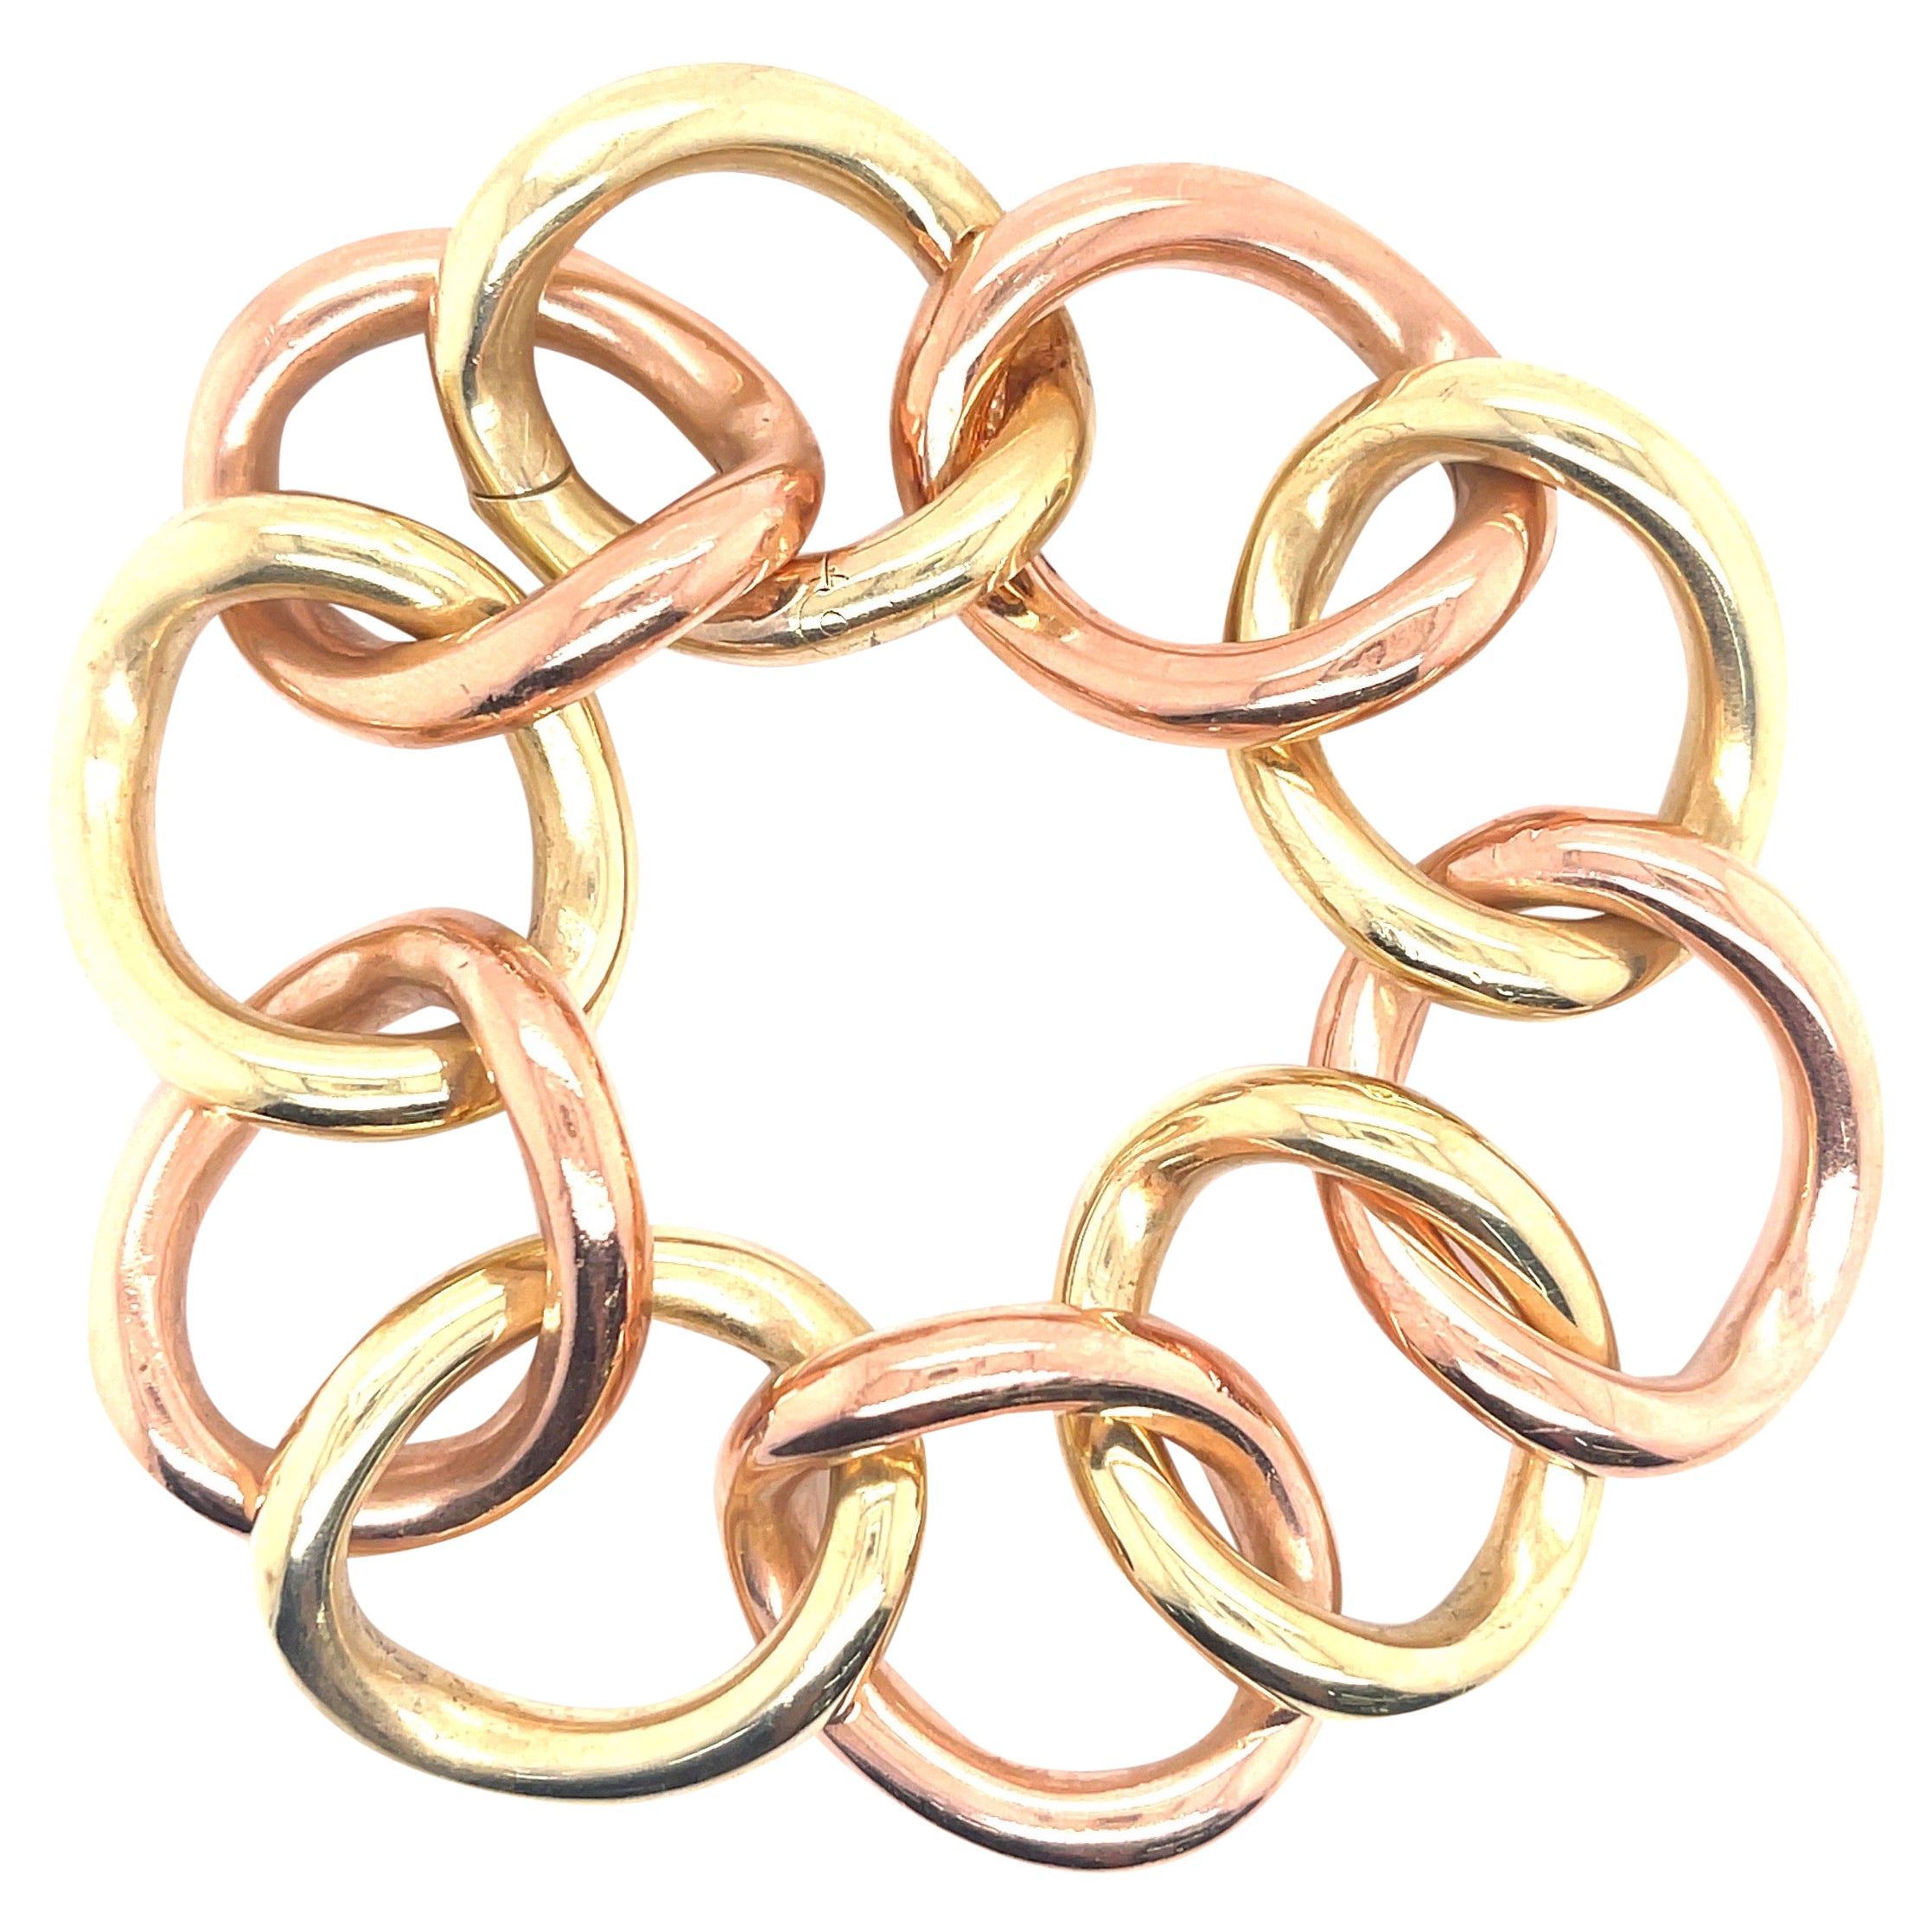 Large Two-Tone 14 Karat Yellow & Rose Gold Link Bracelet 42.9 Grams 8 Inches